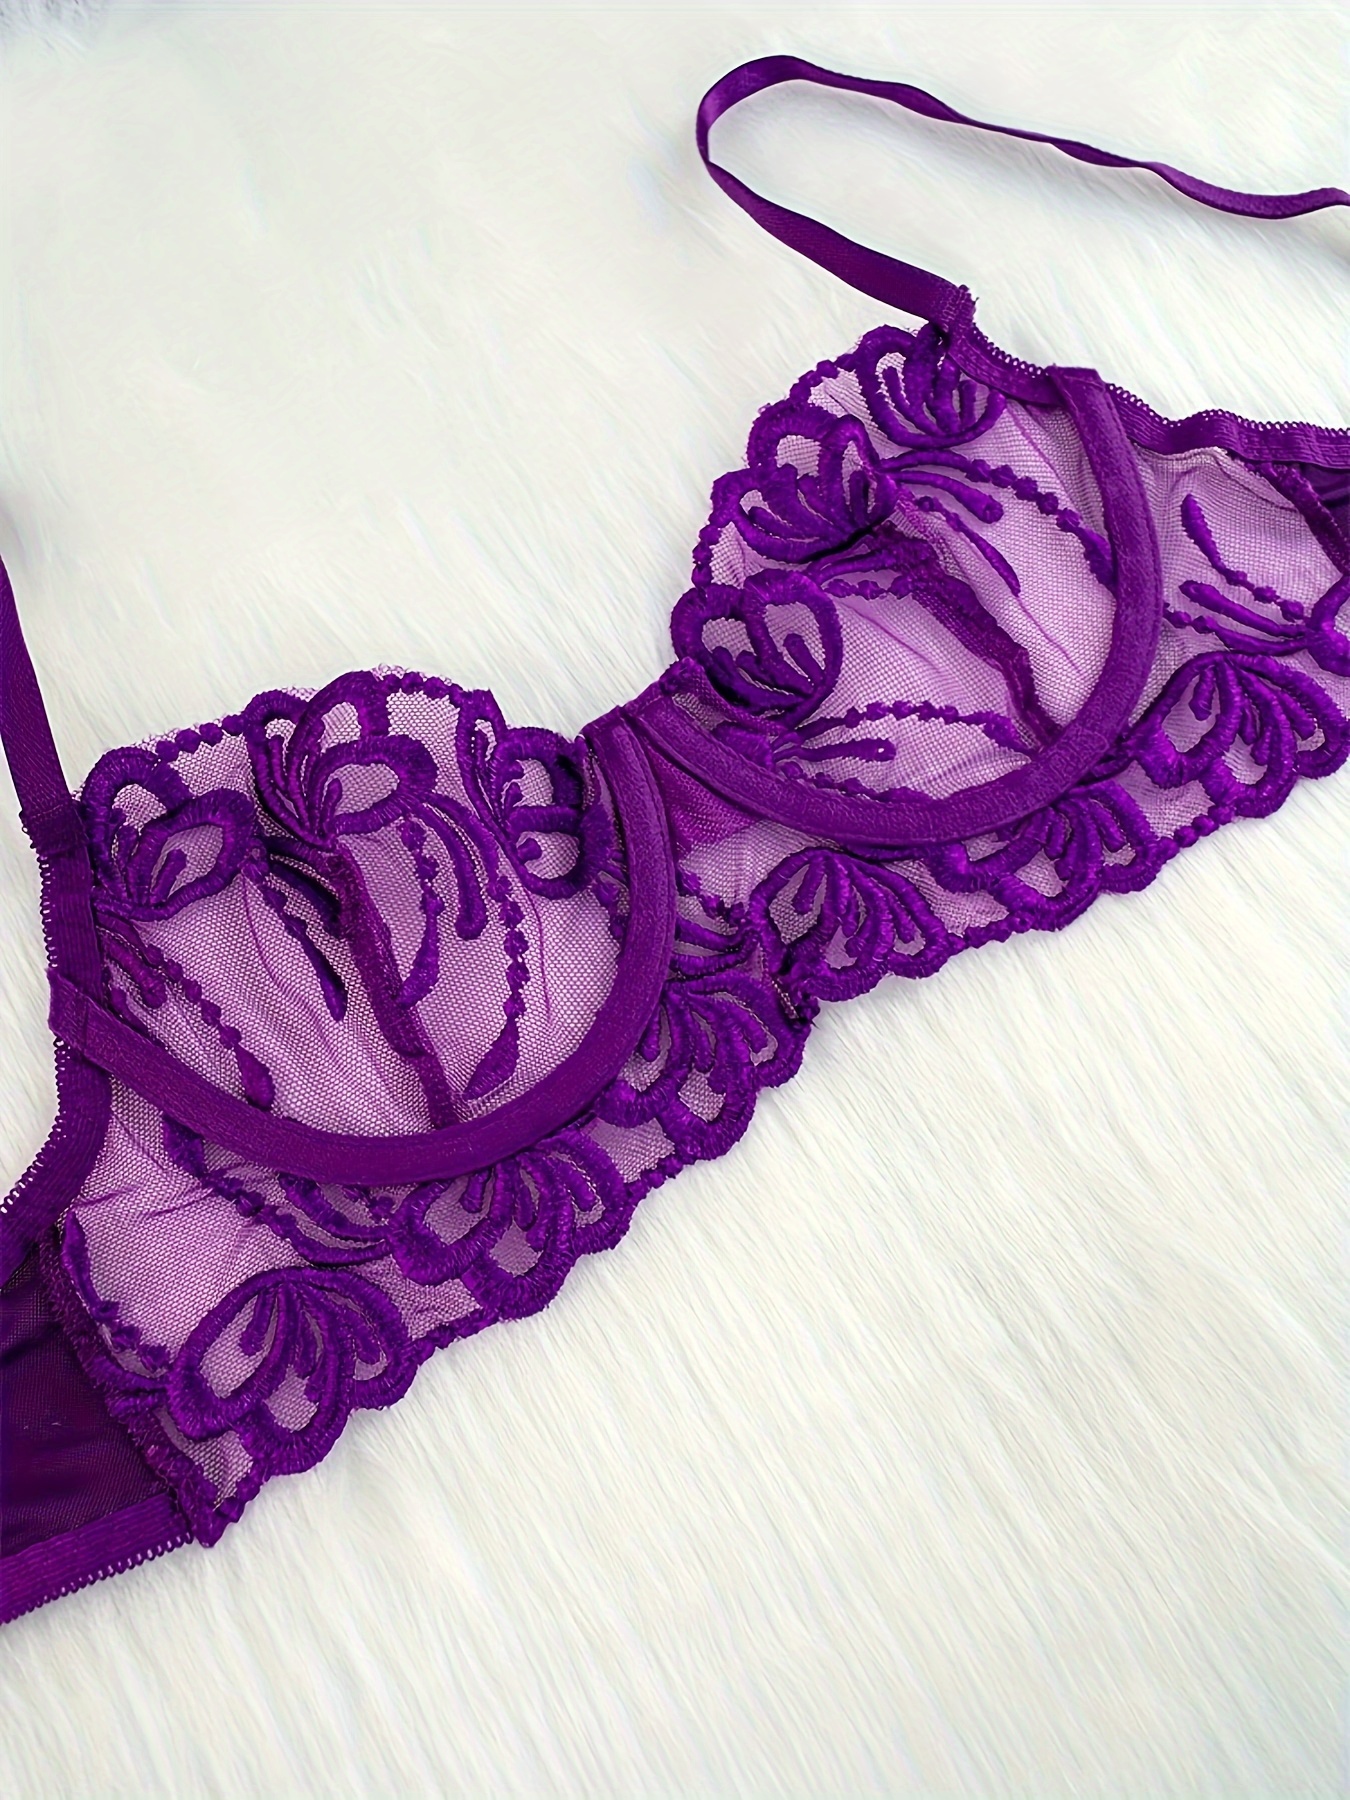 CLZOUD Matching Underwear Sets for Women Purple Lace Printed Underwear Set  Comfortable Soft Mesh Gathering Bindings L